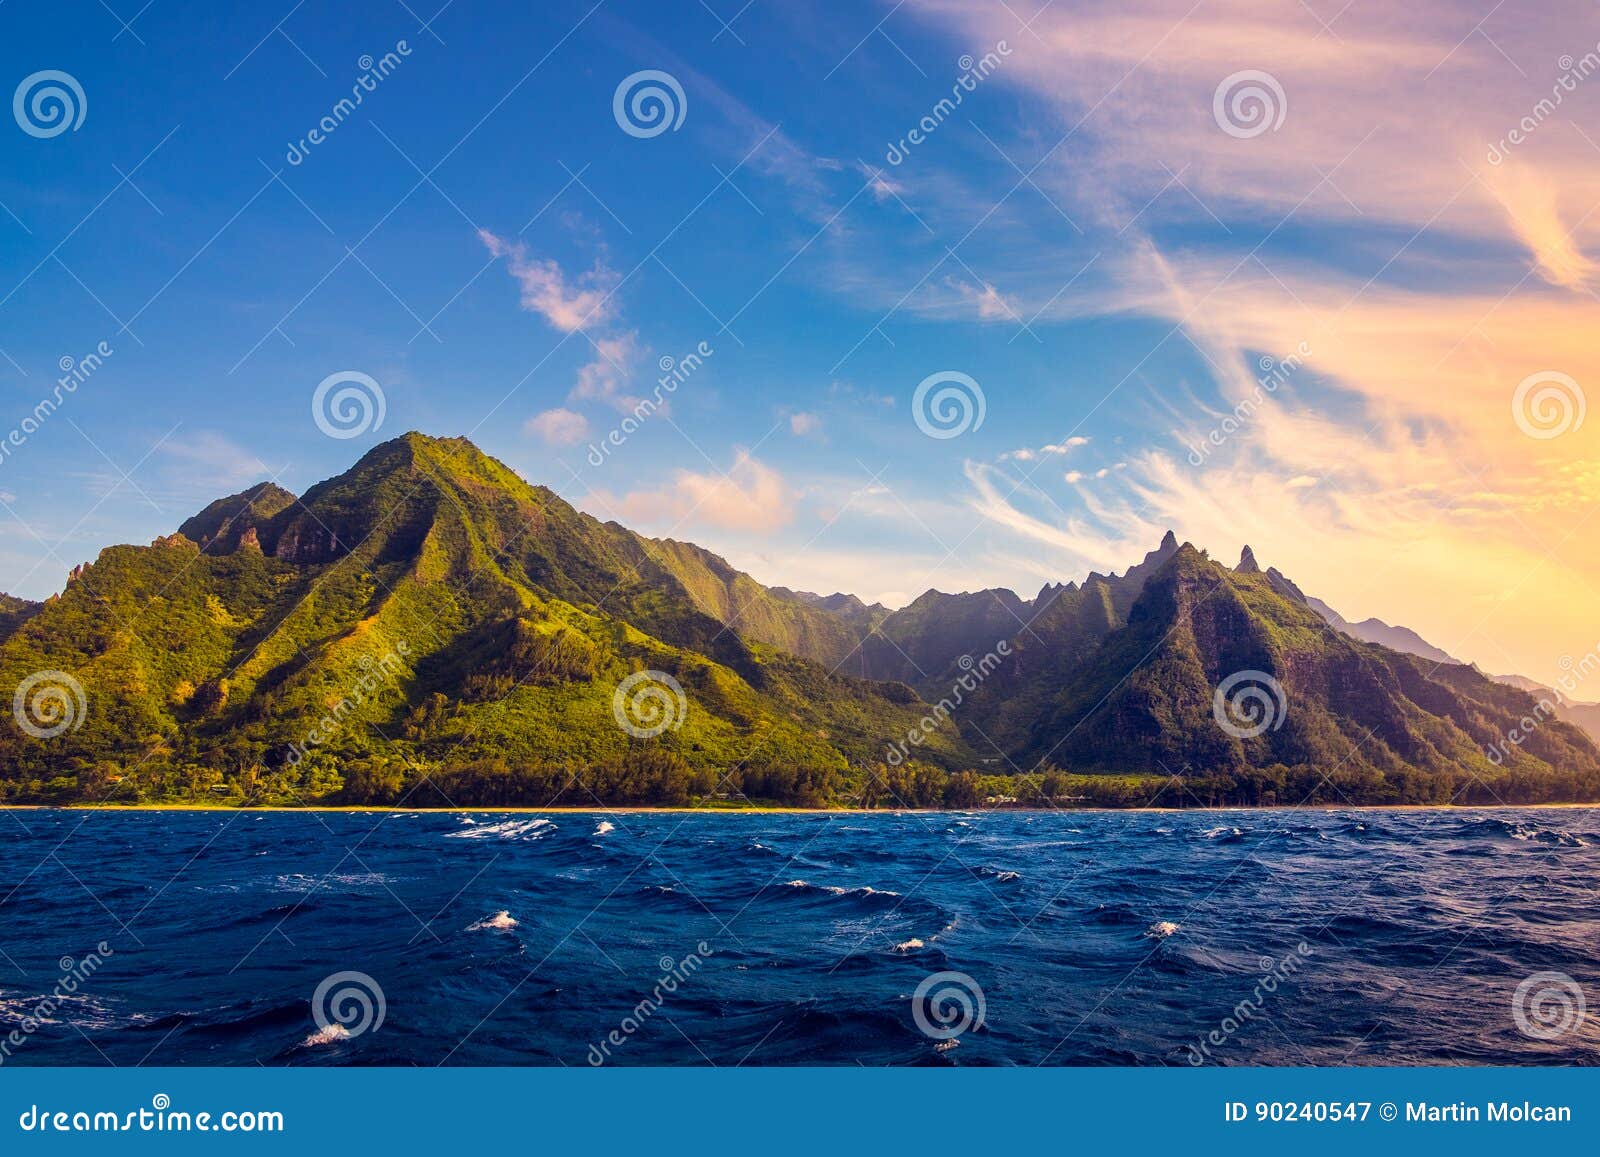 dramatic landscape of na pali coast, kauai, hawaii